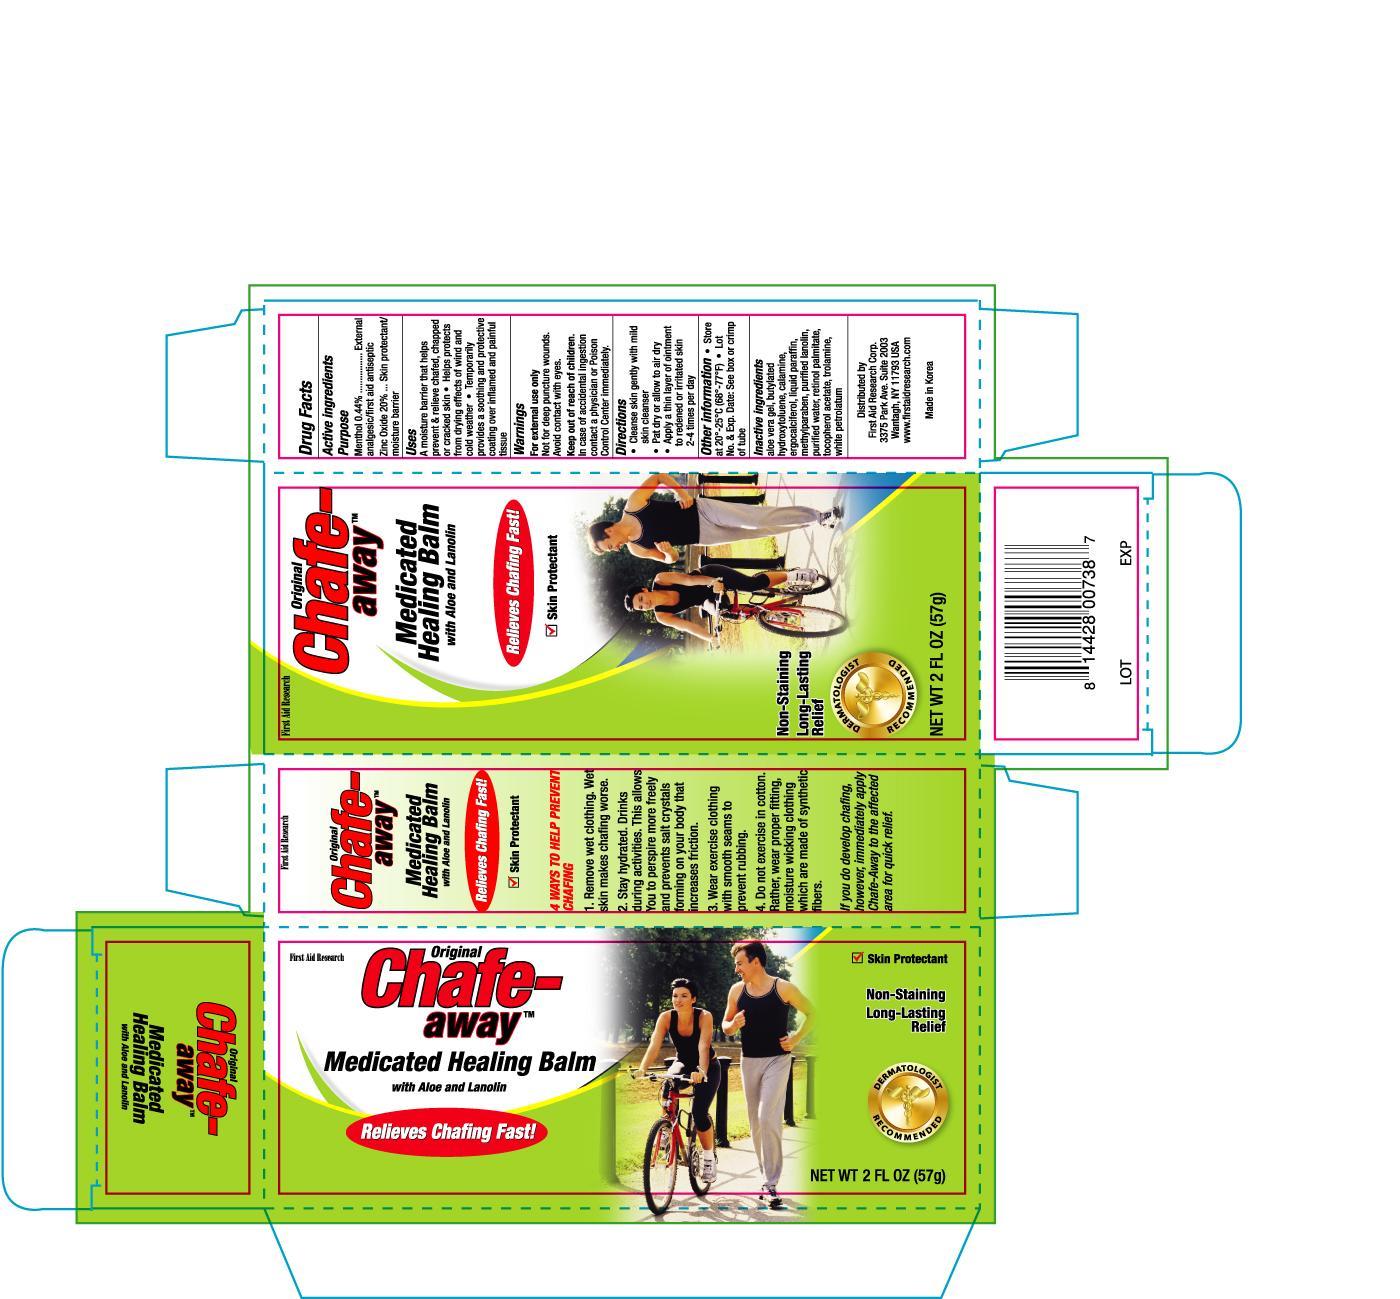 image of carton label